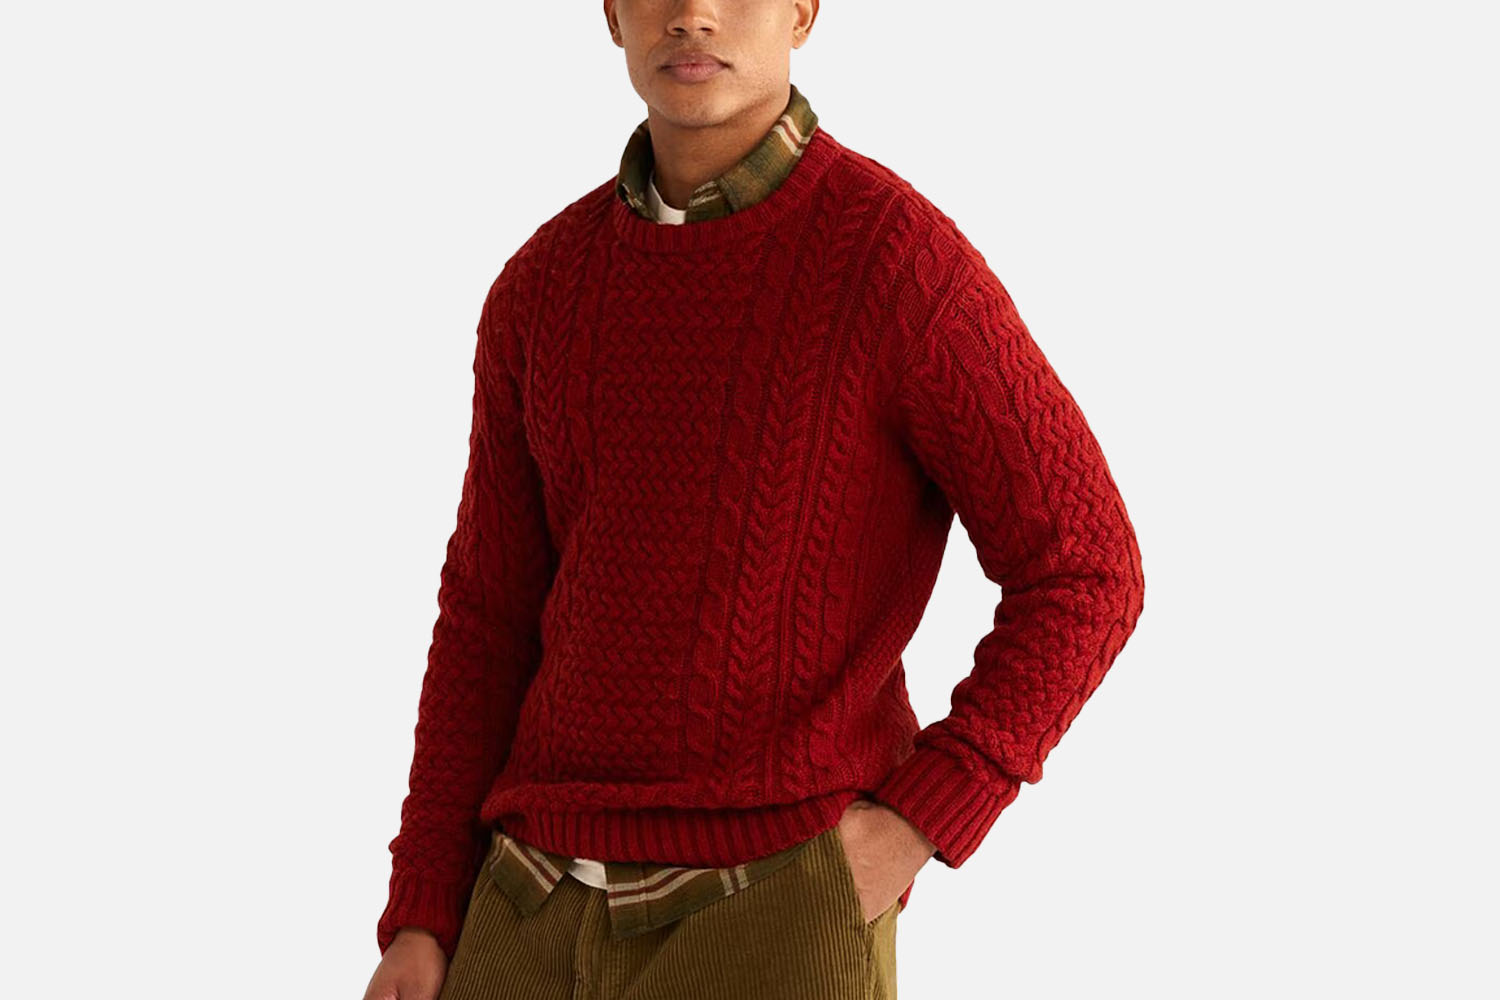 Pendleton Shetland Fisherman Sweater